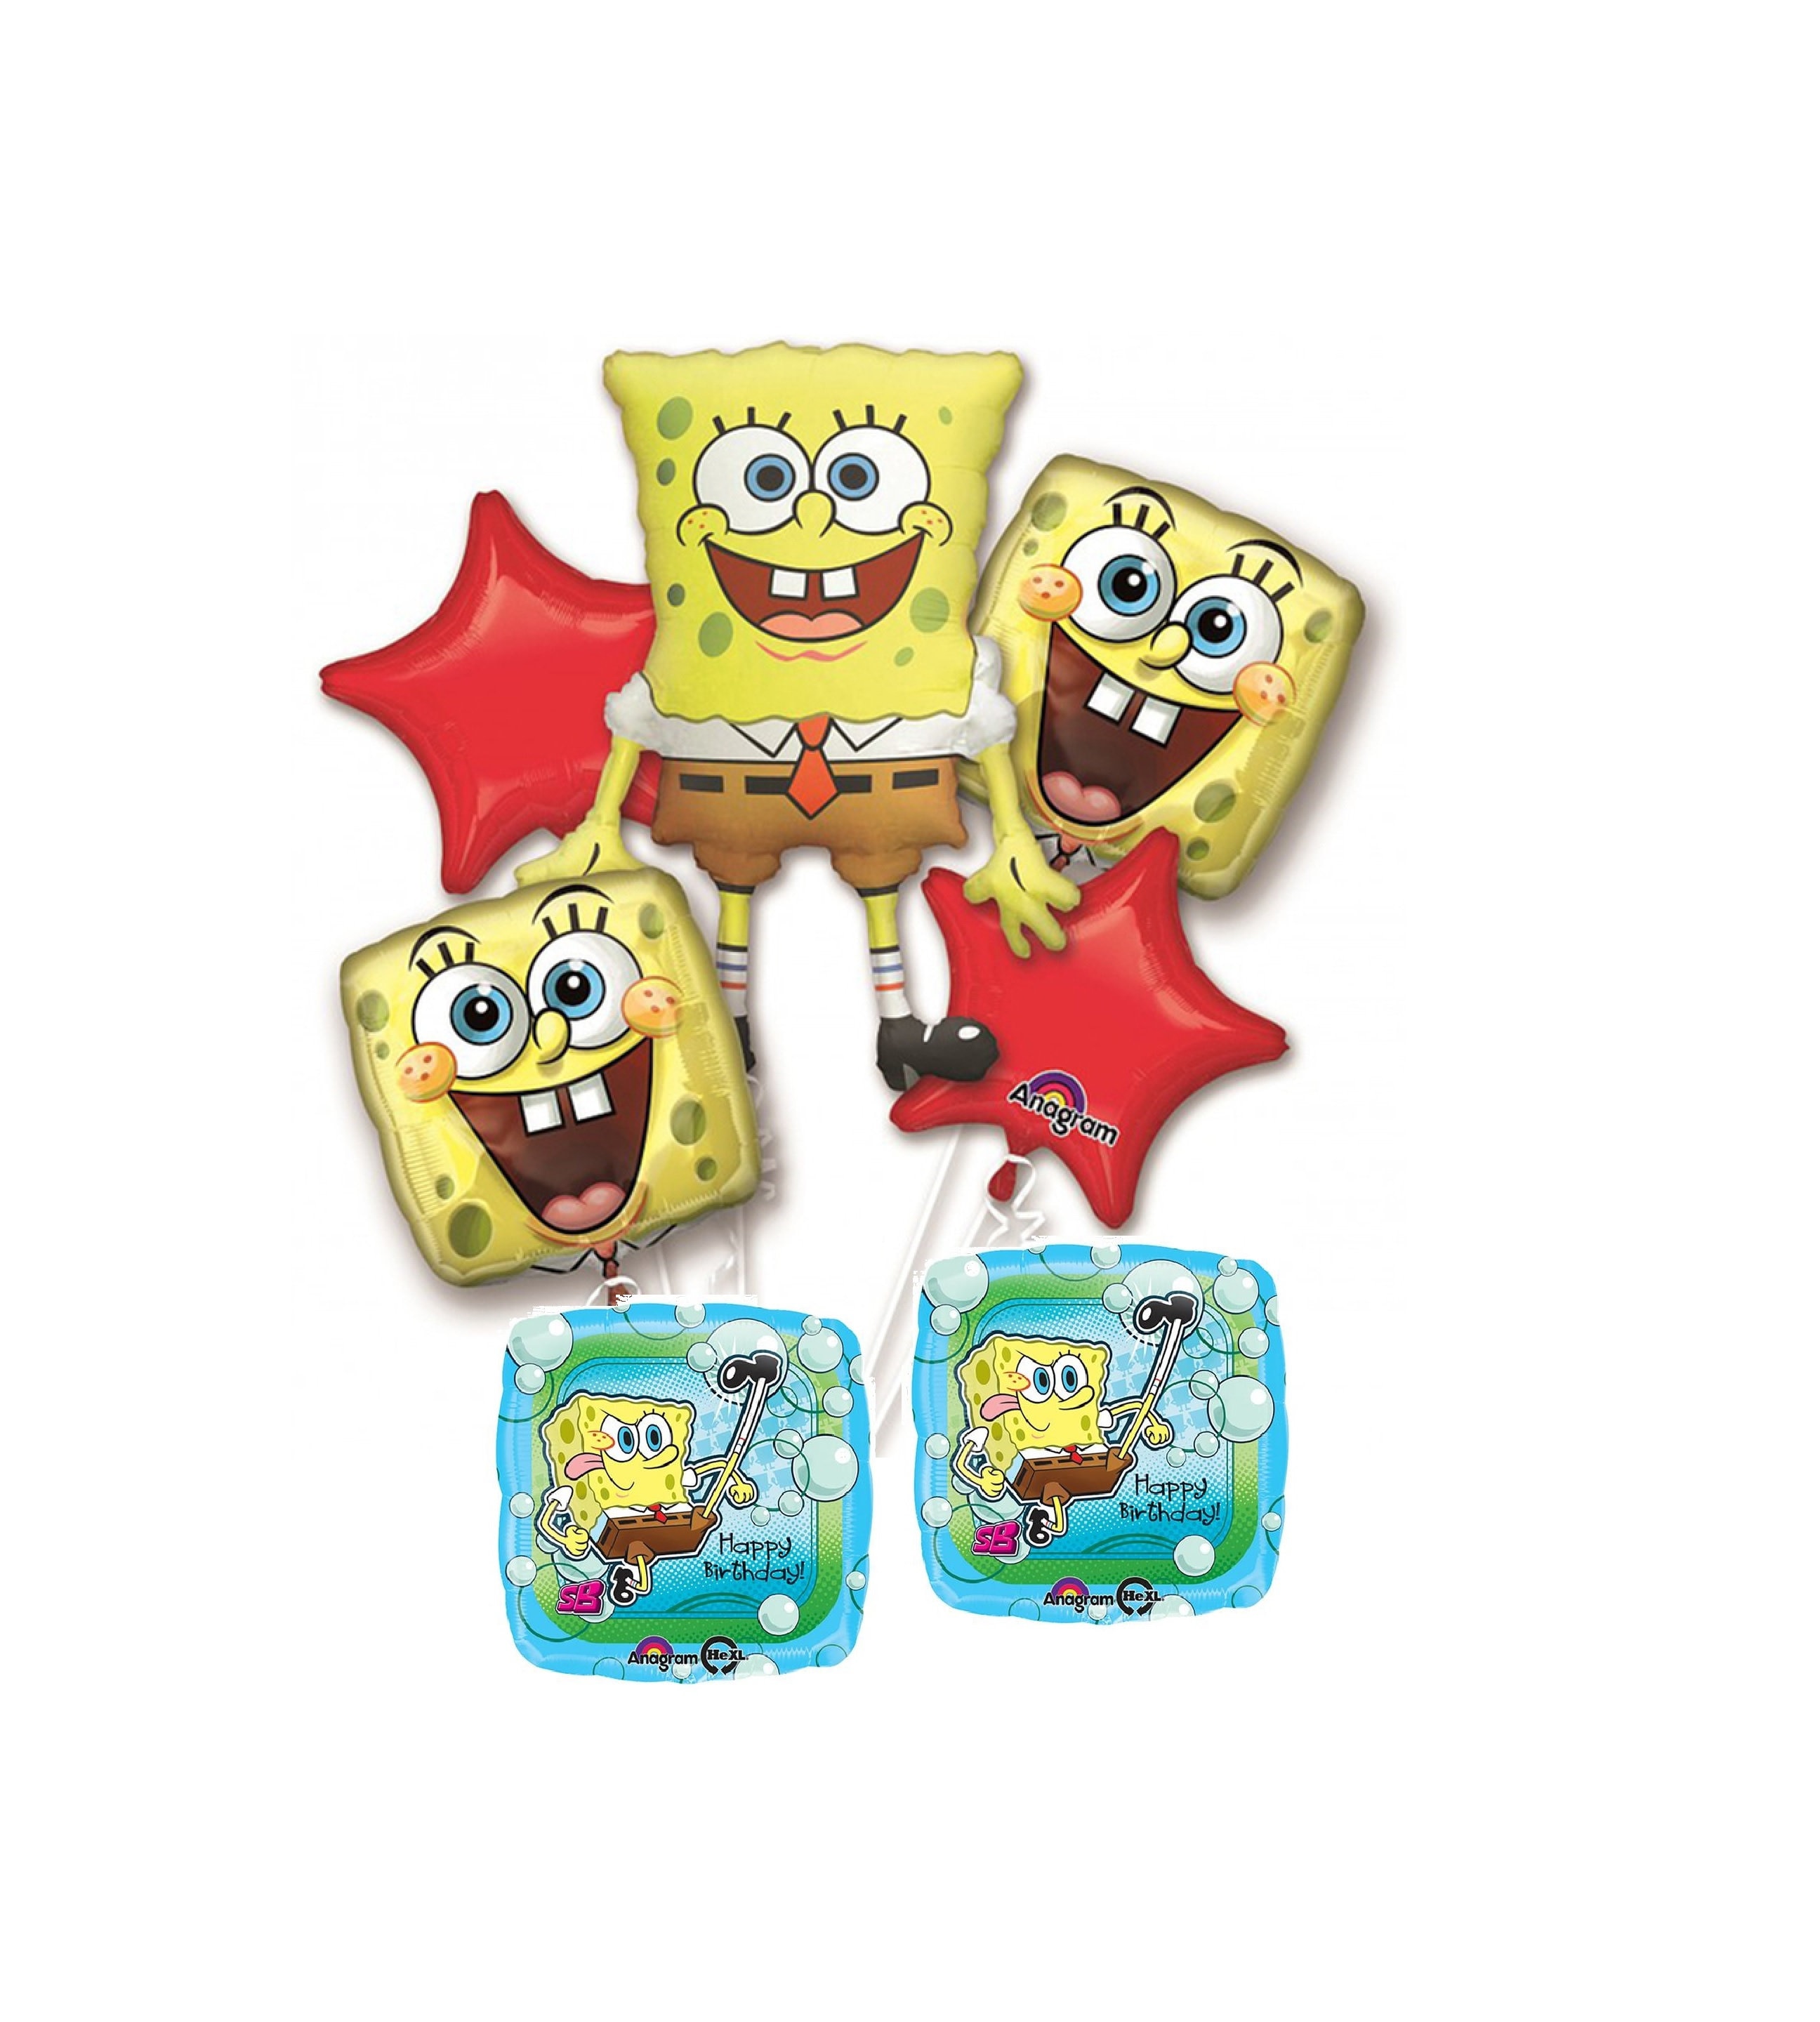 Sponge Bob Balloon Arch  Spongebob birthday, Spongebob birthday